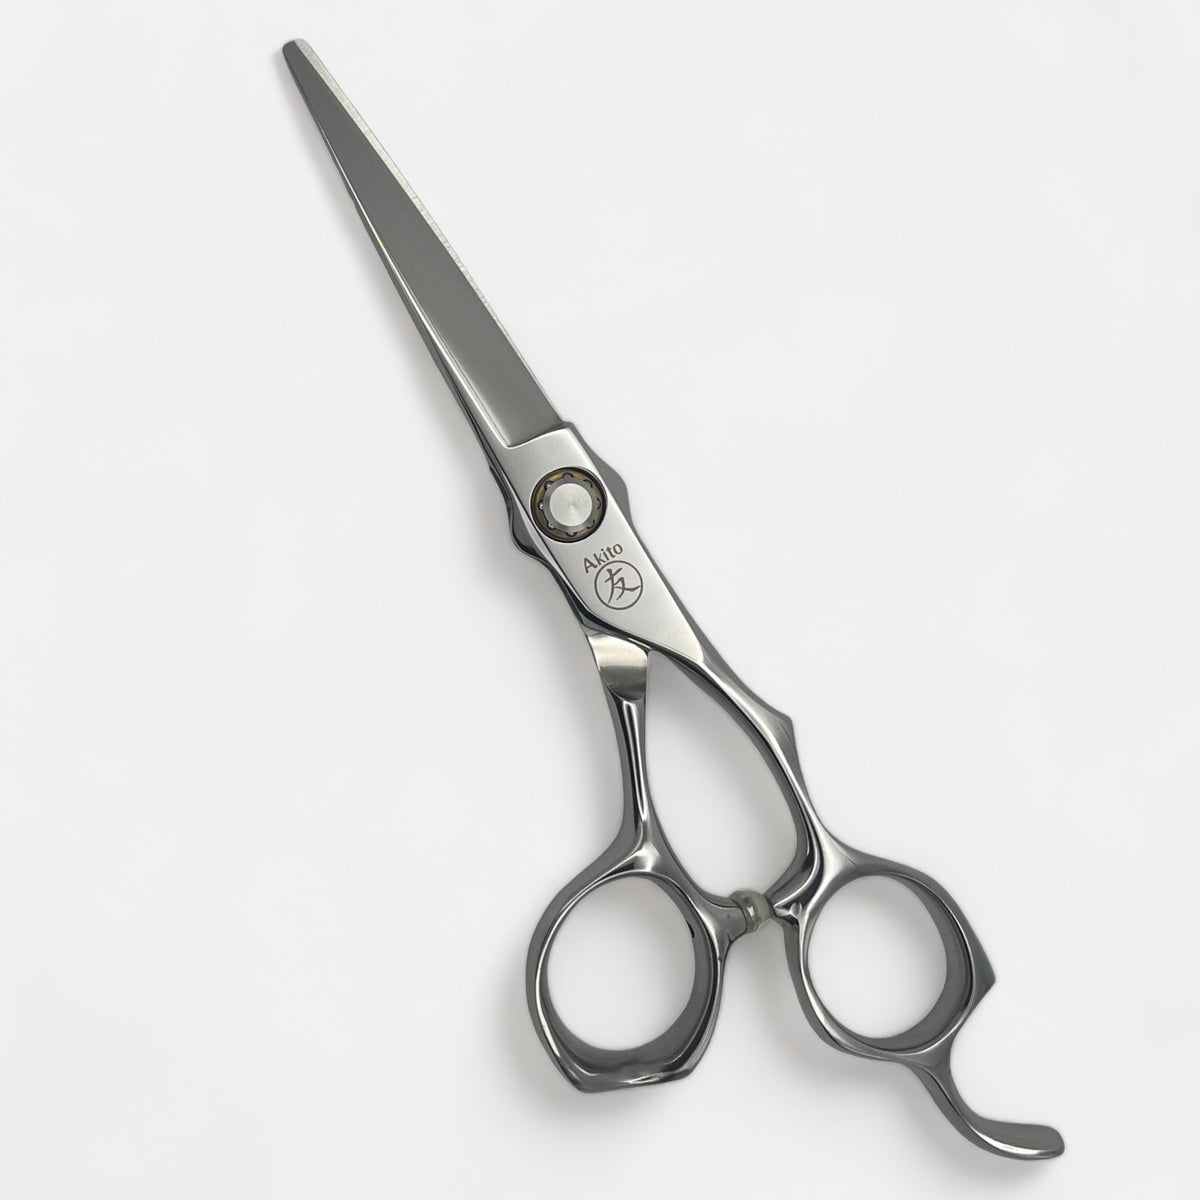 Kasai CNP Professional Hair Scissors side angle